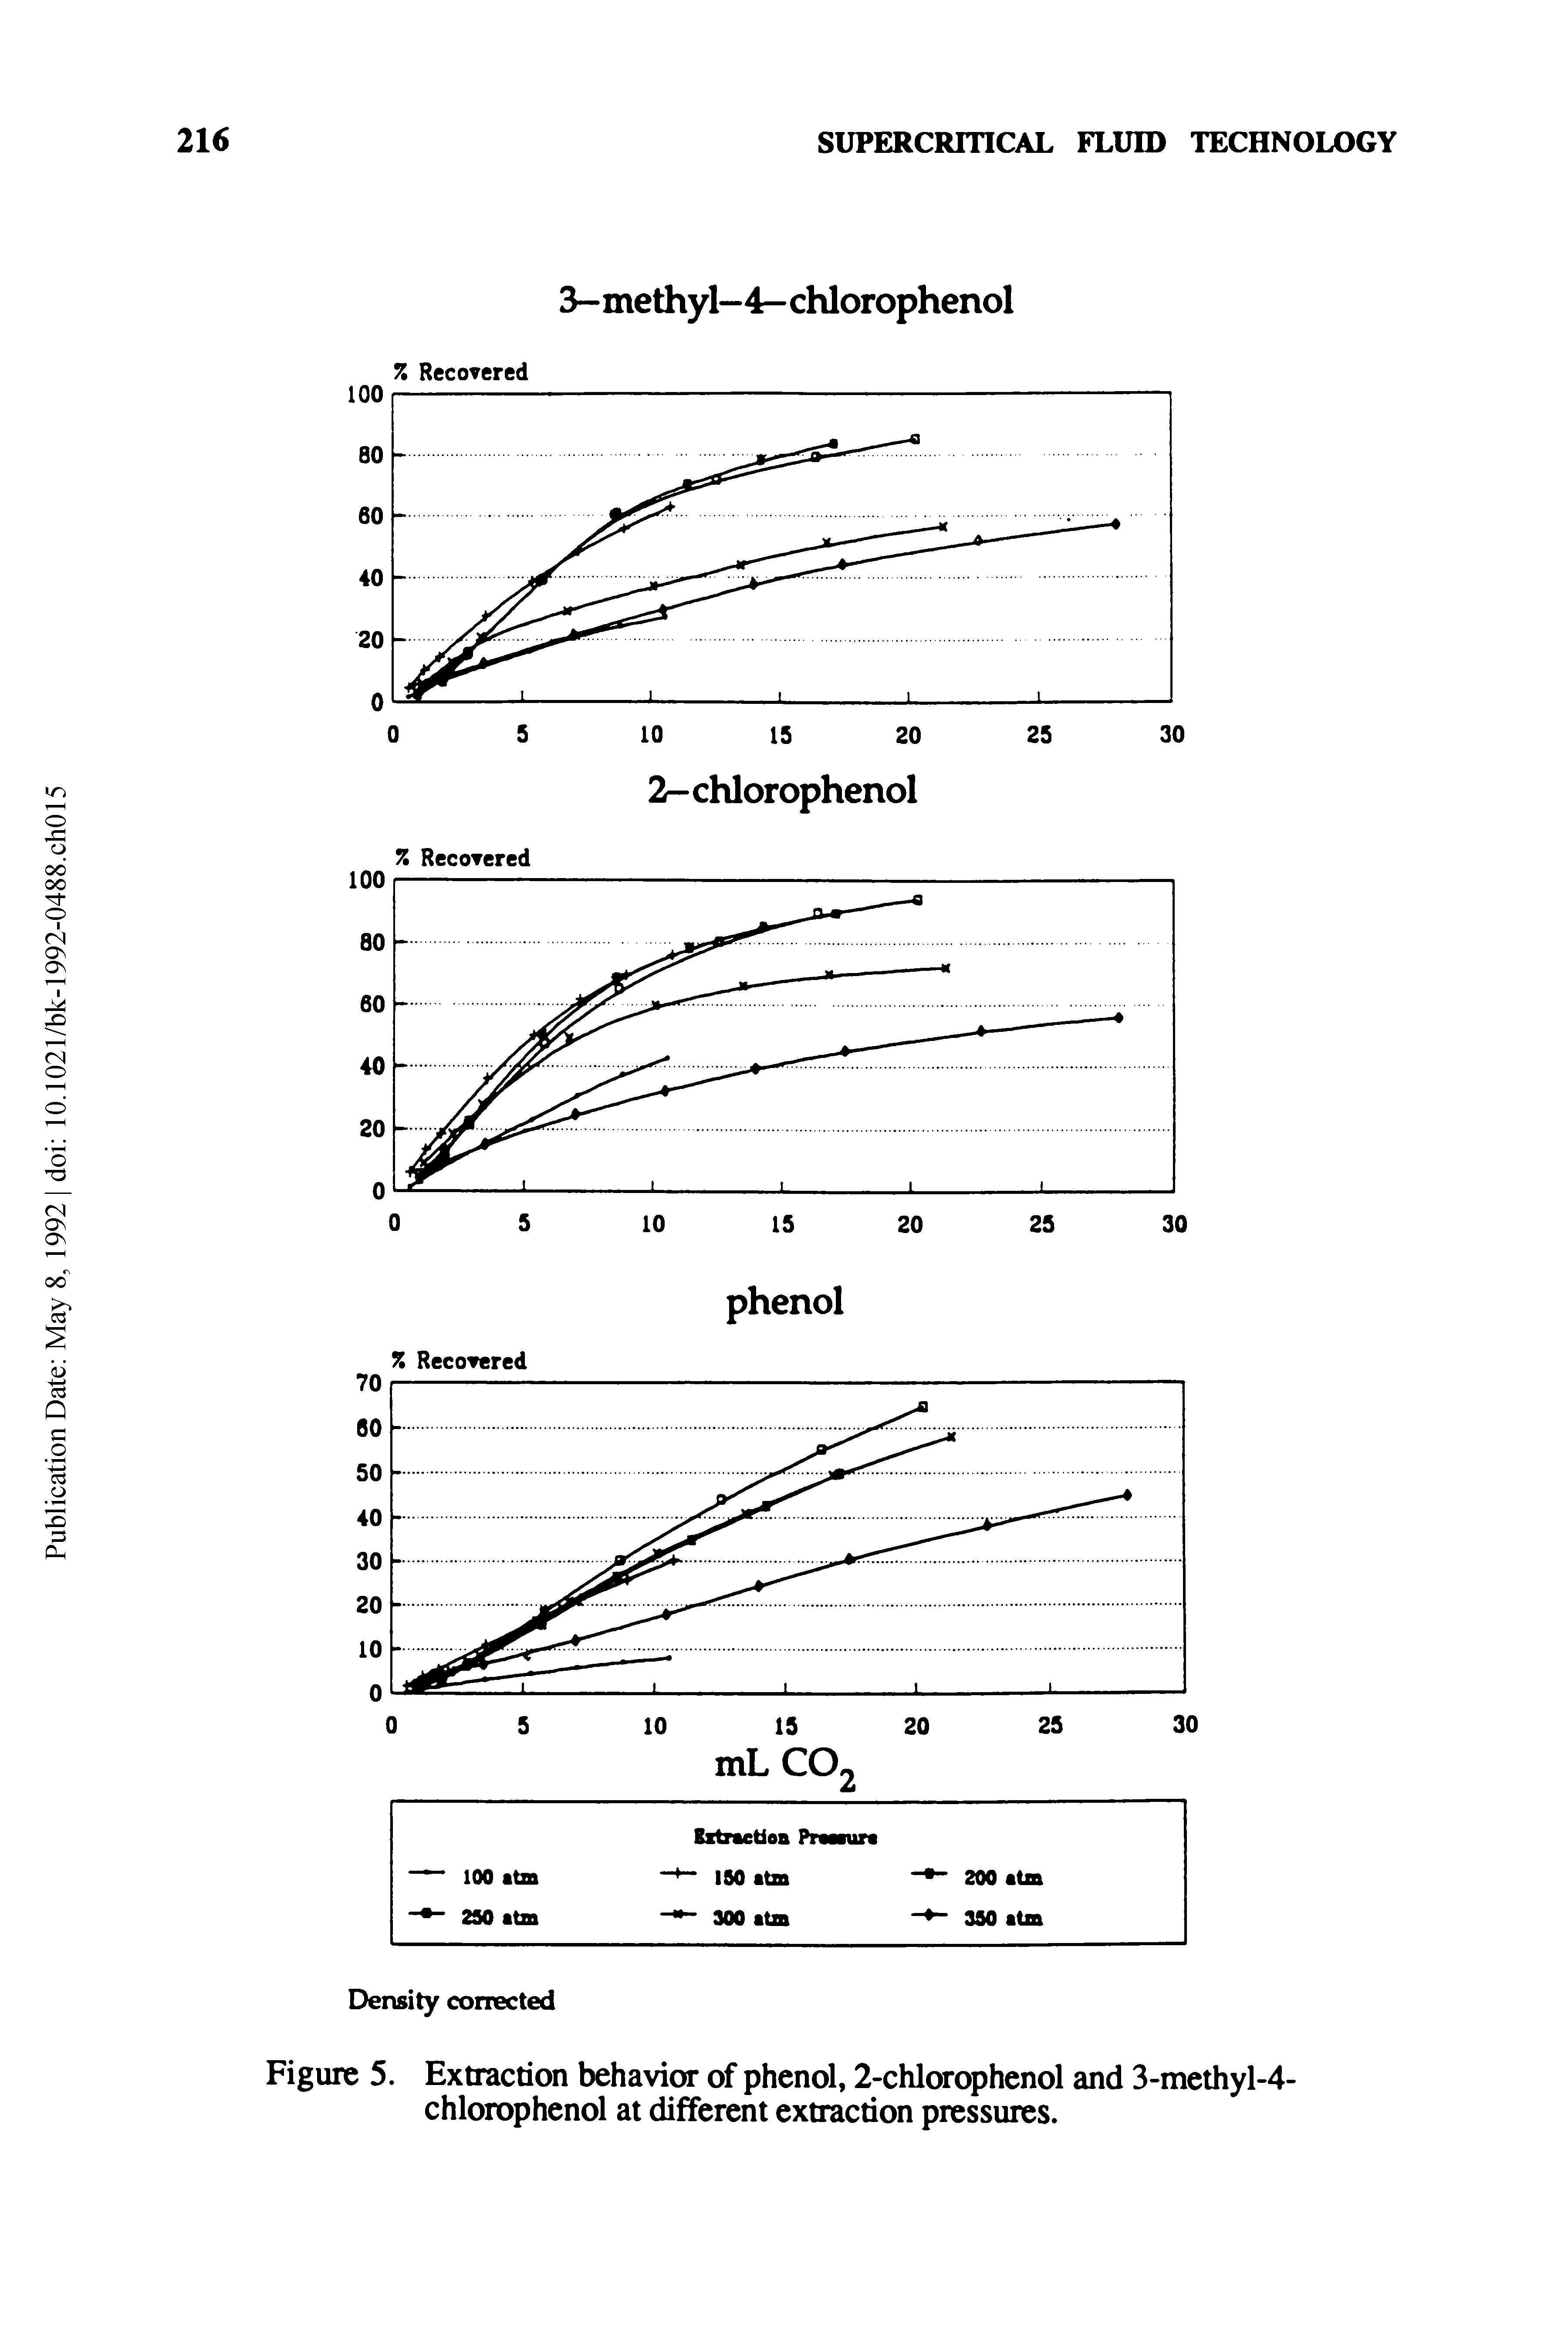 Figure 5. Extraction behavior of phenol, 2-chlorophenol and 3-methyl-4-chlorophenol at different extraction pressures.